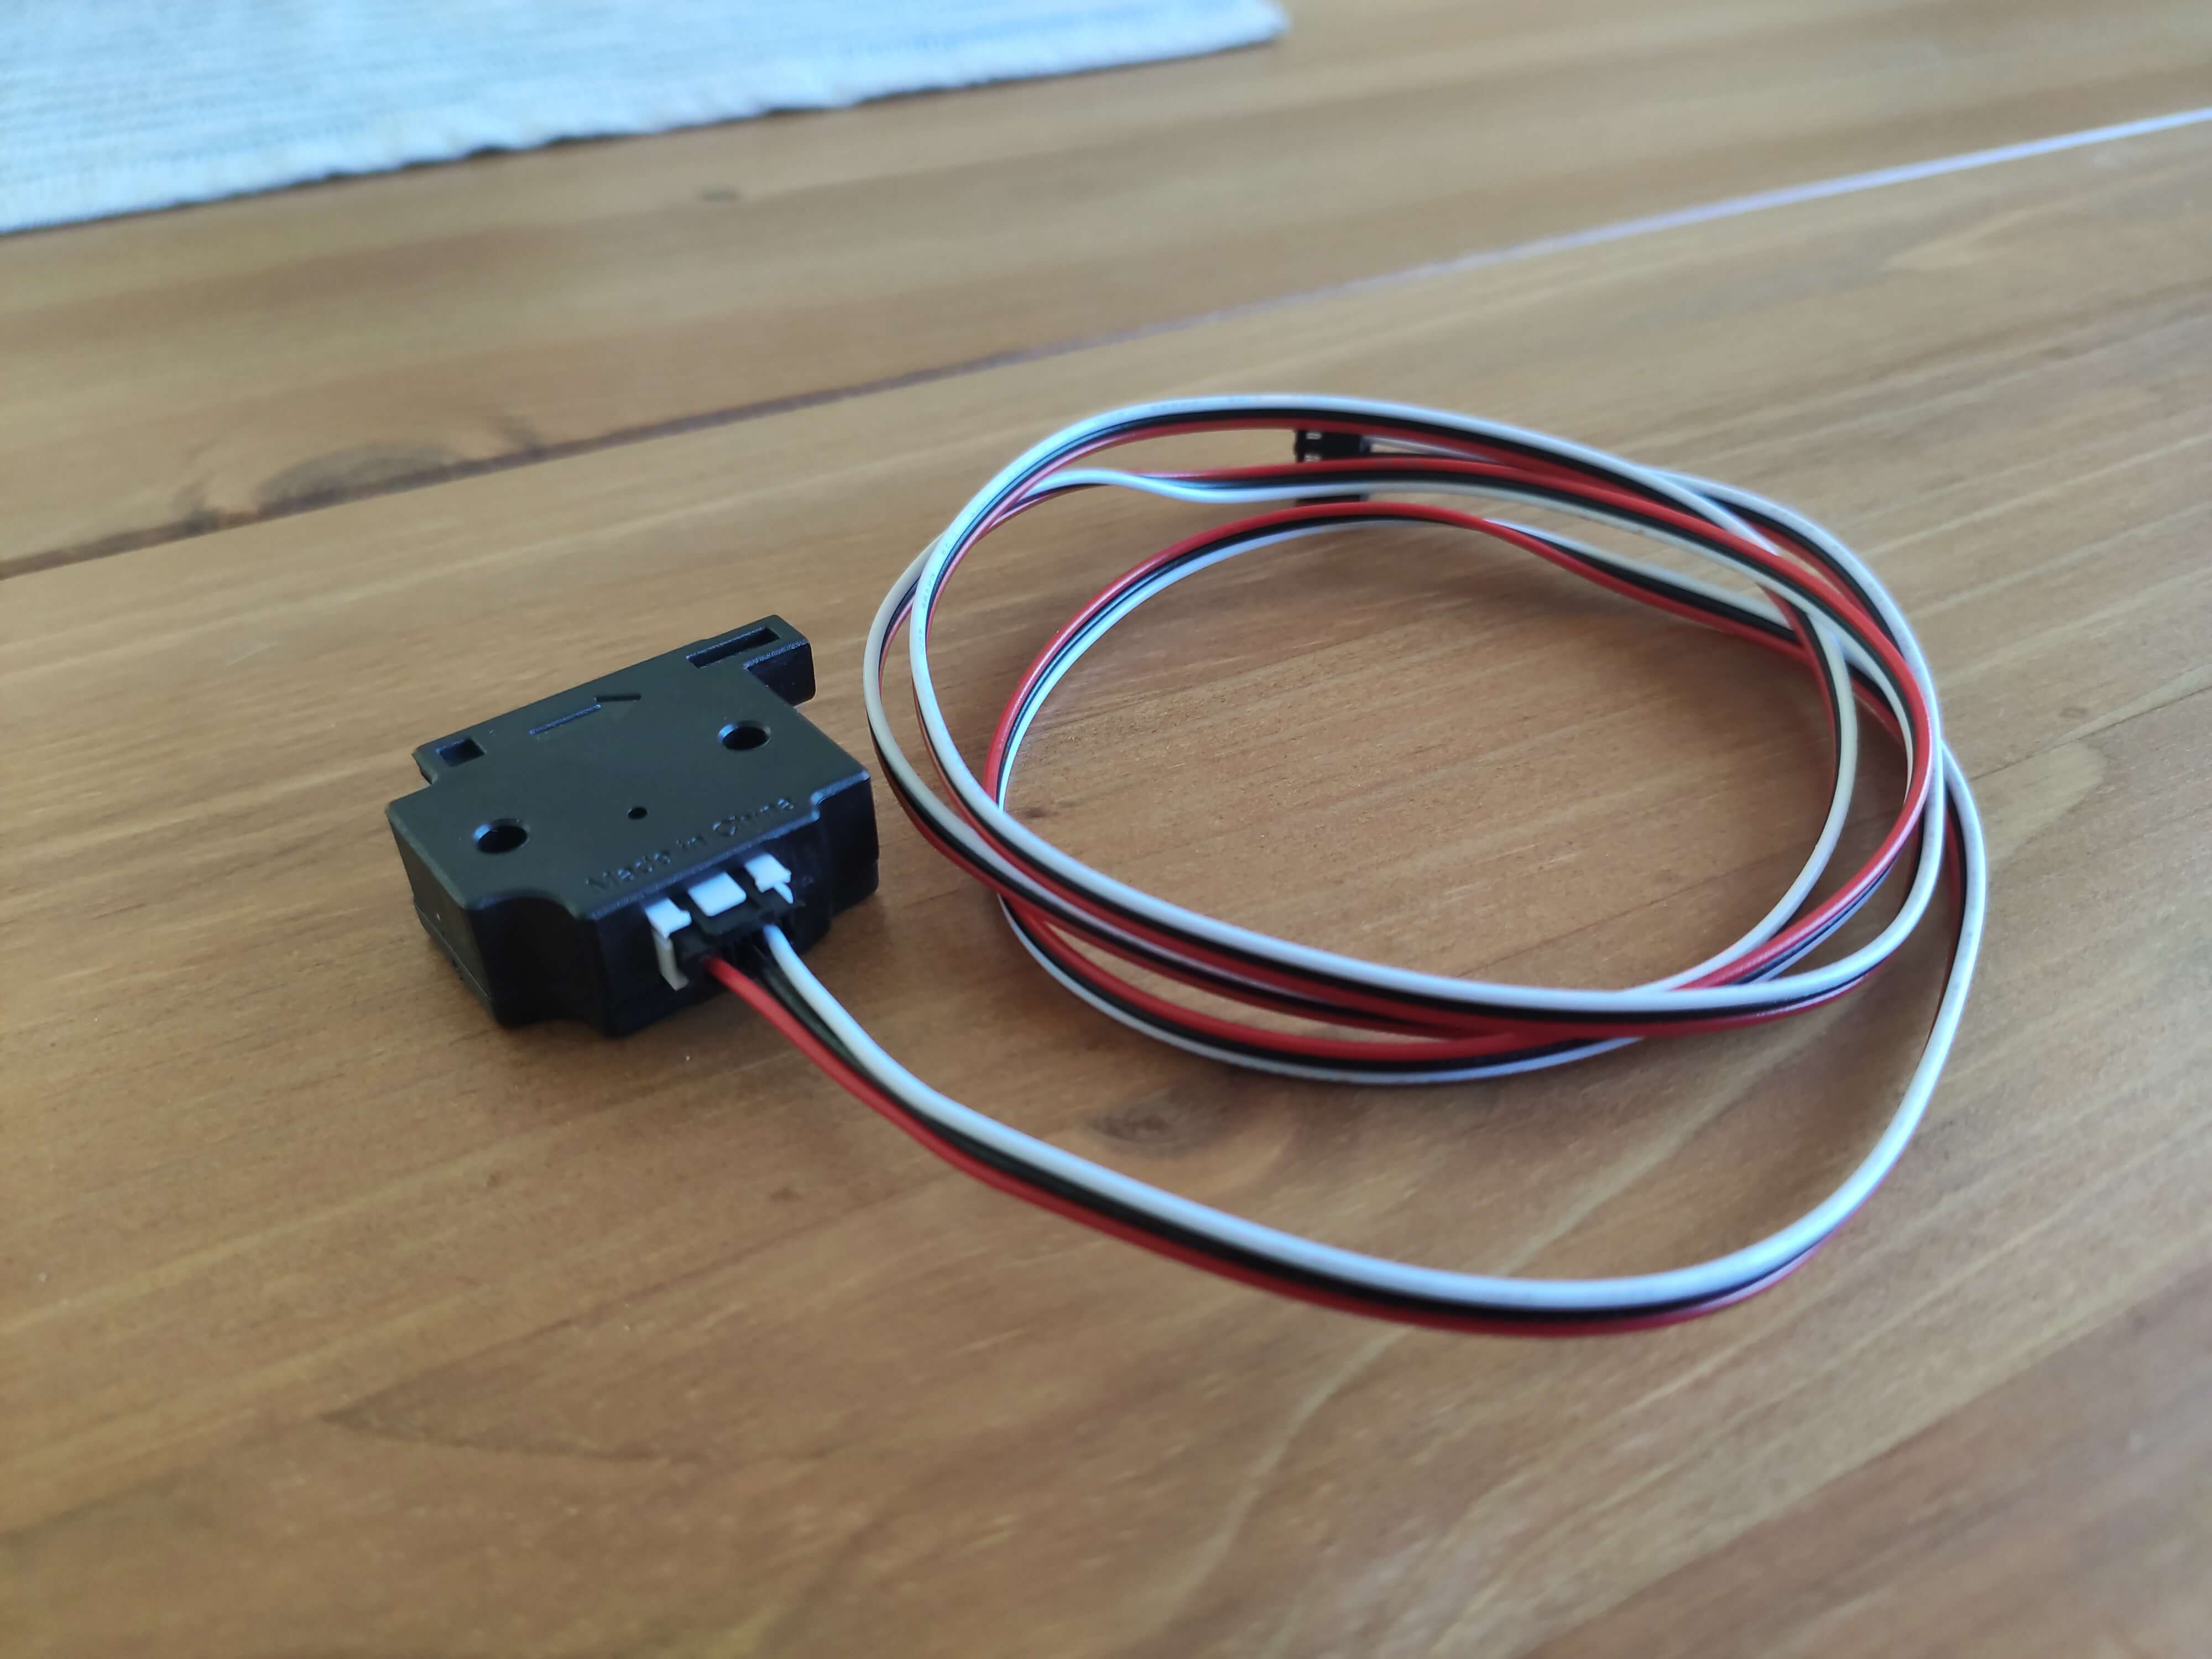 Attach and setup a filament runout sensor for your Ender 3 V2